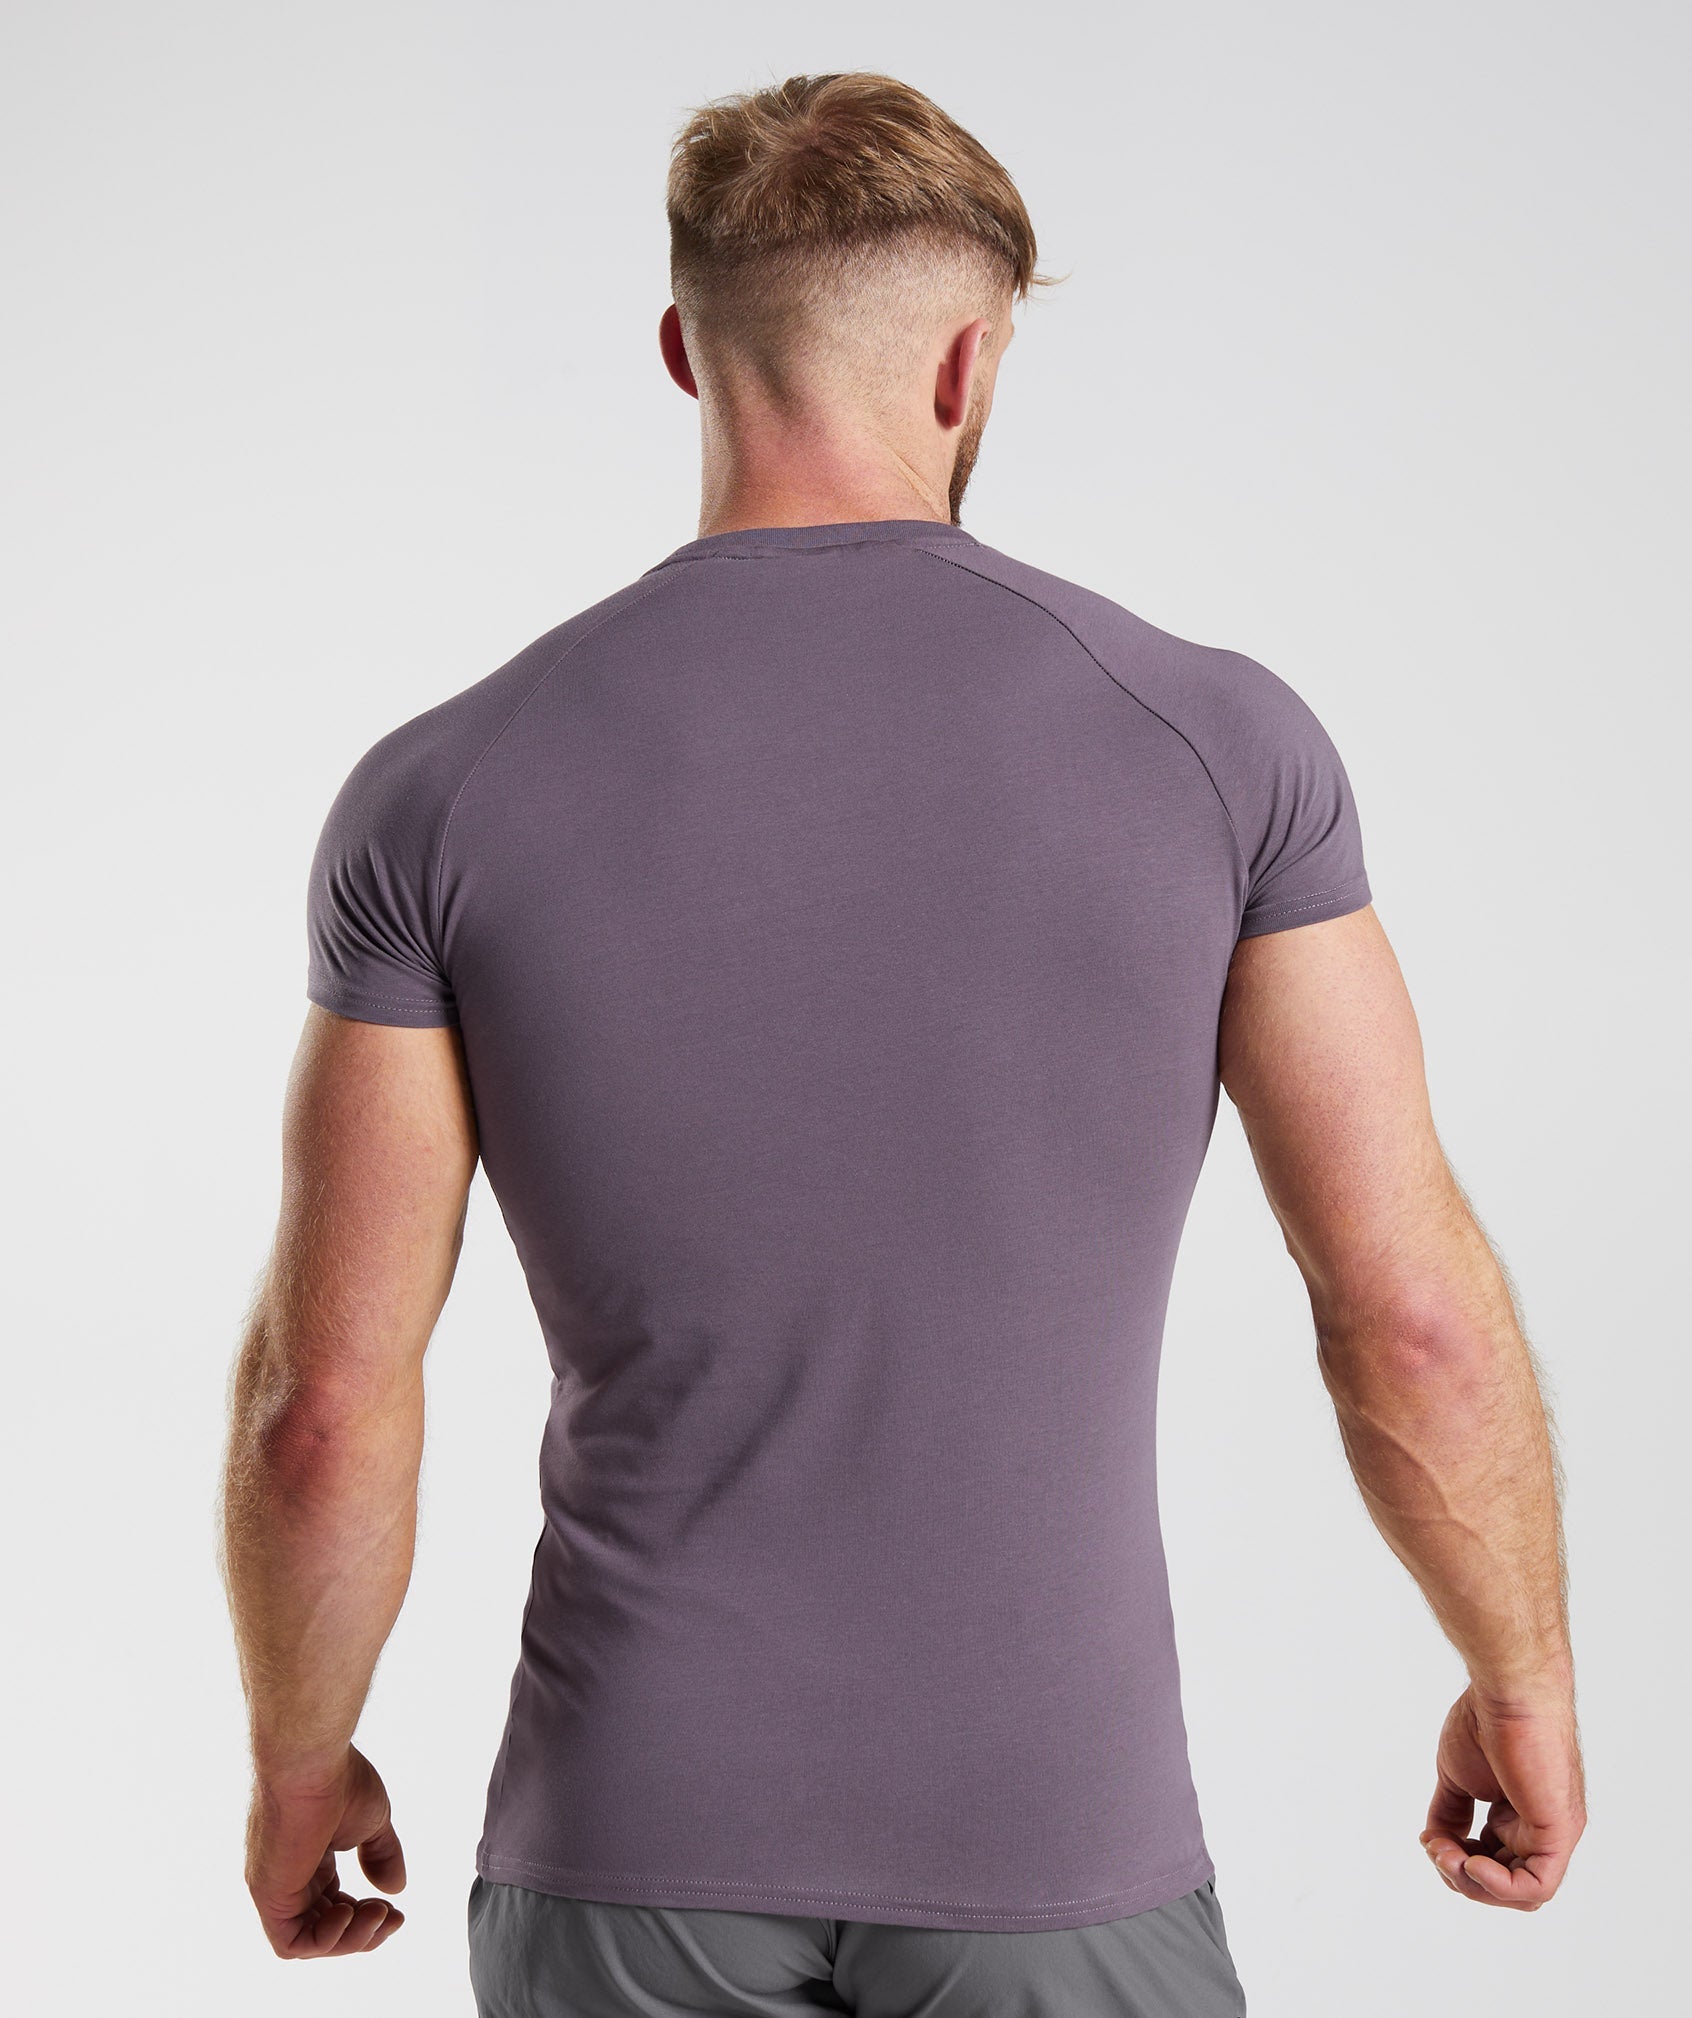 Gymshark Apollo T-Shirt - Musk Lilac